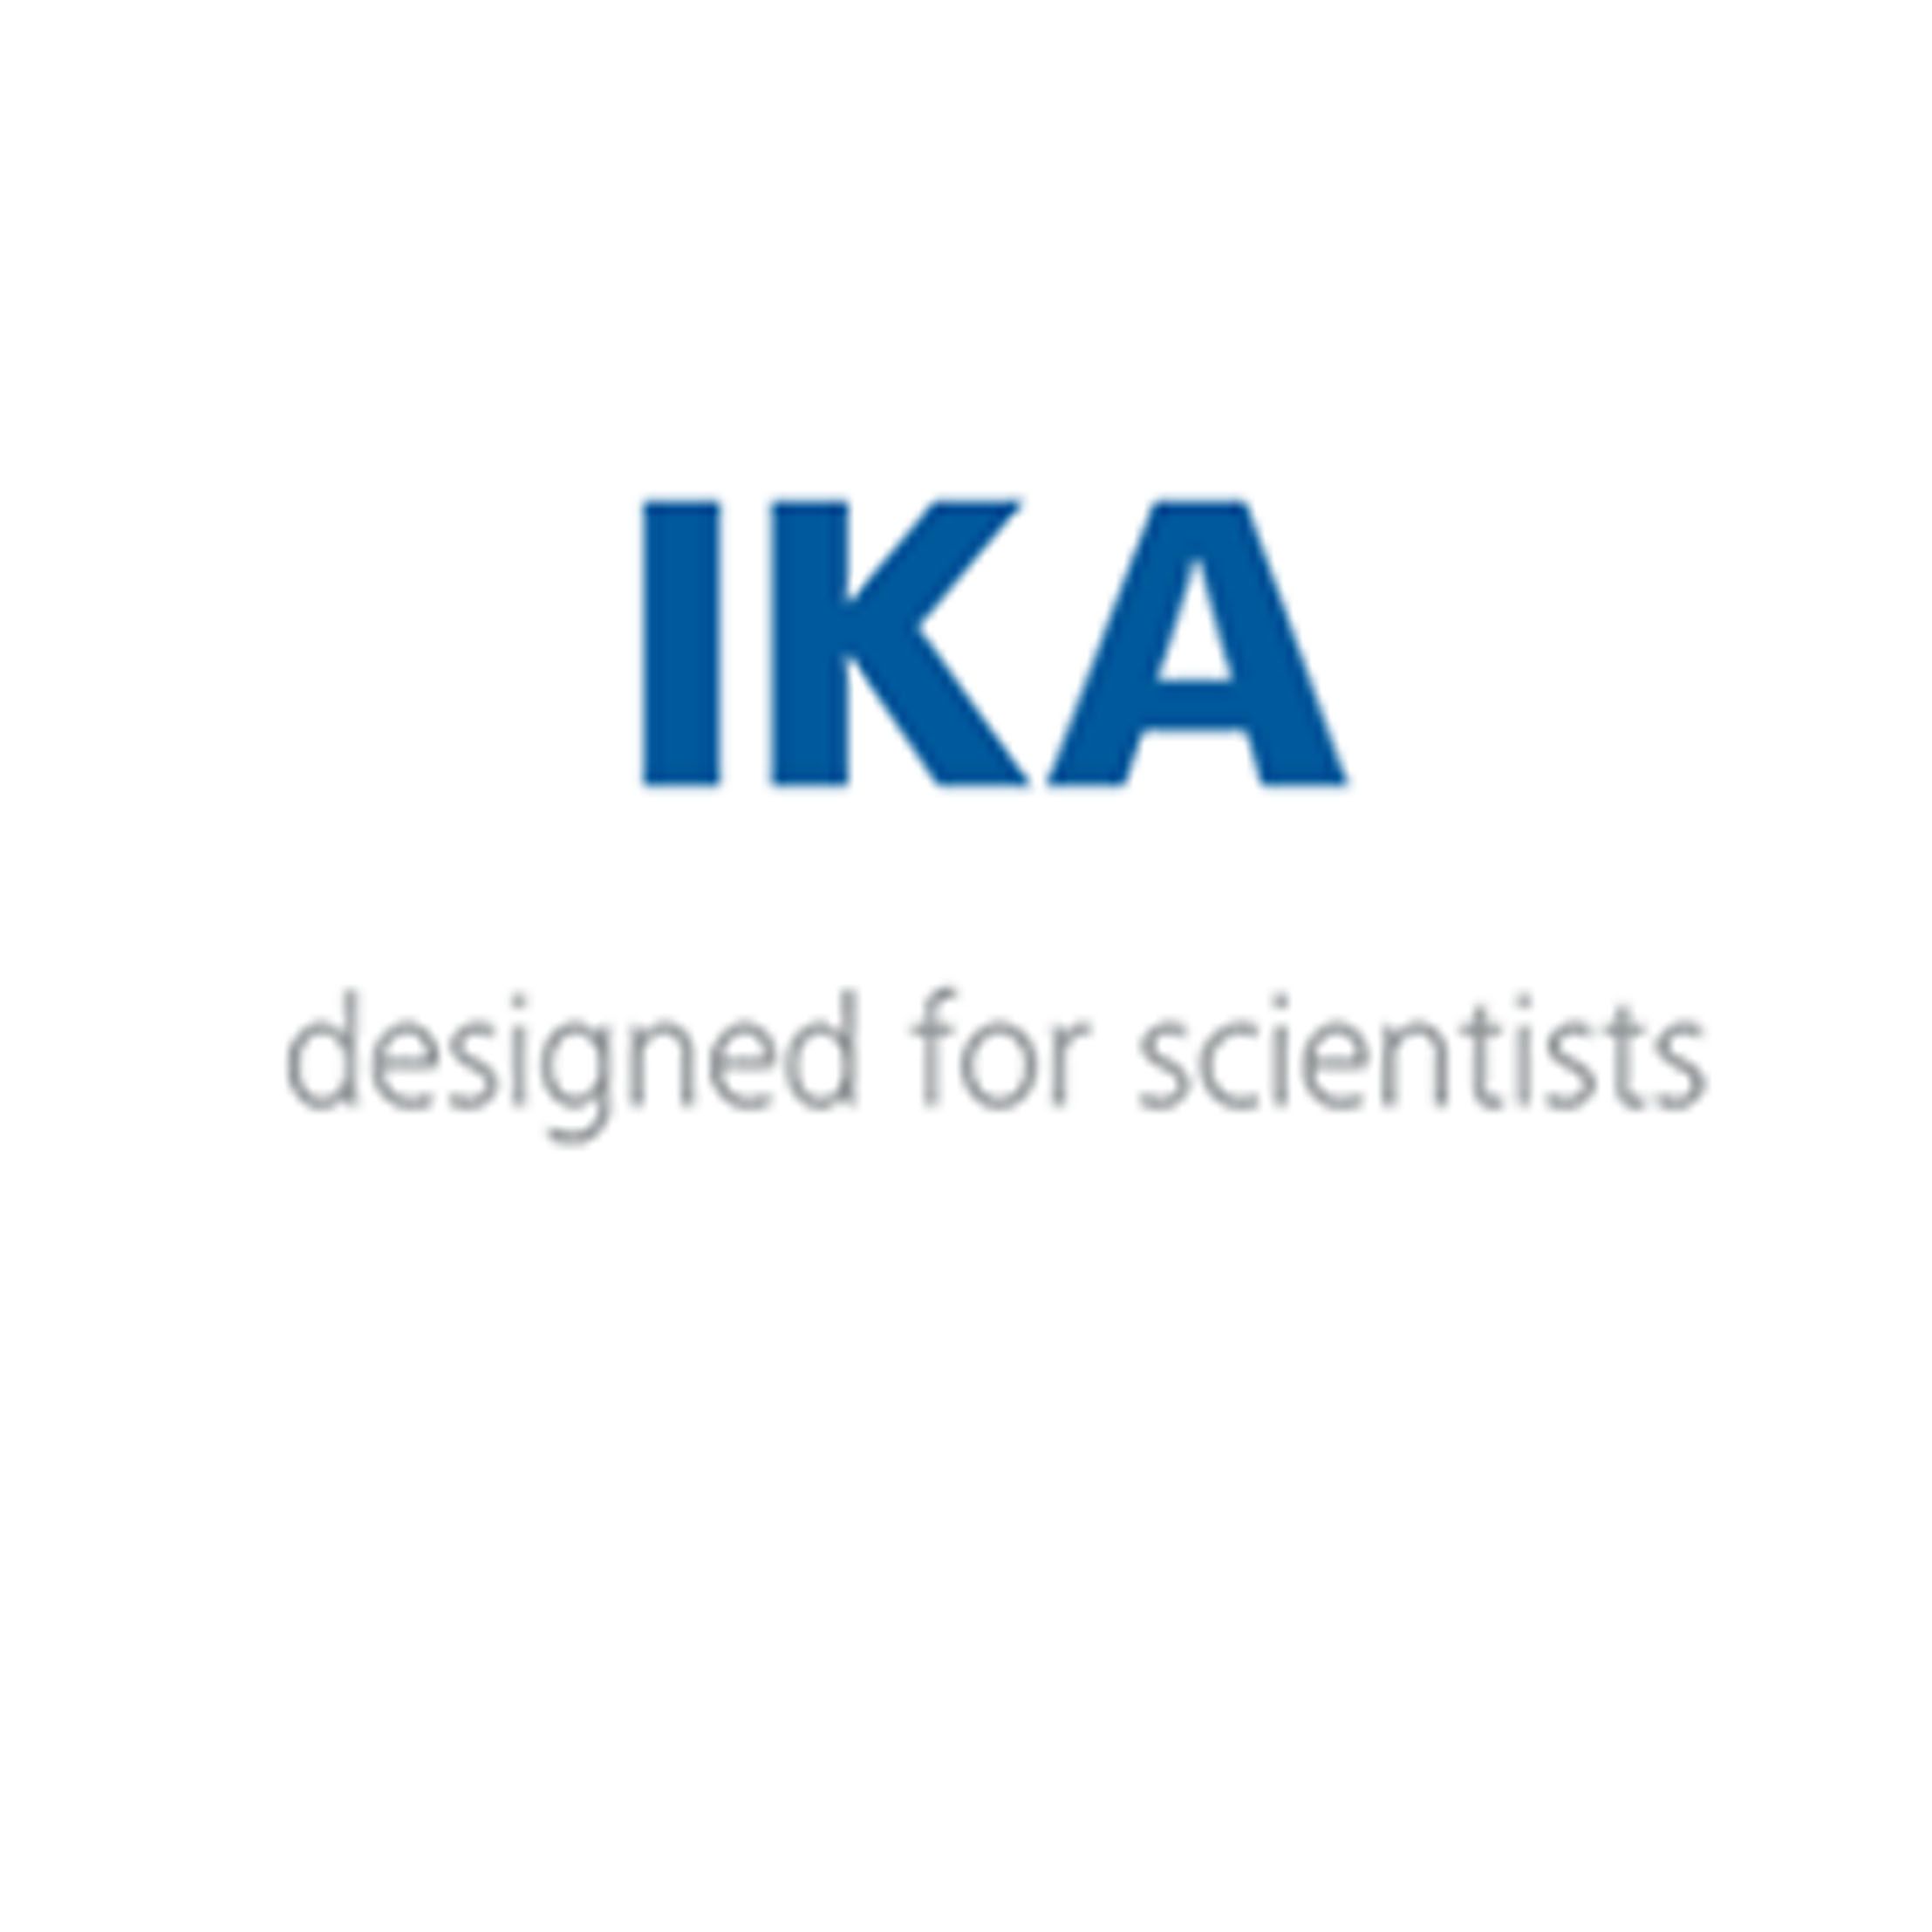 IKA磁力搅拌器、混合器、高架搅拌器、振动筛、均质器、磨机、旋转蒸发器、热量计、实验室反应器和专门开发的实验室和分析应用软件